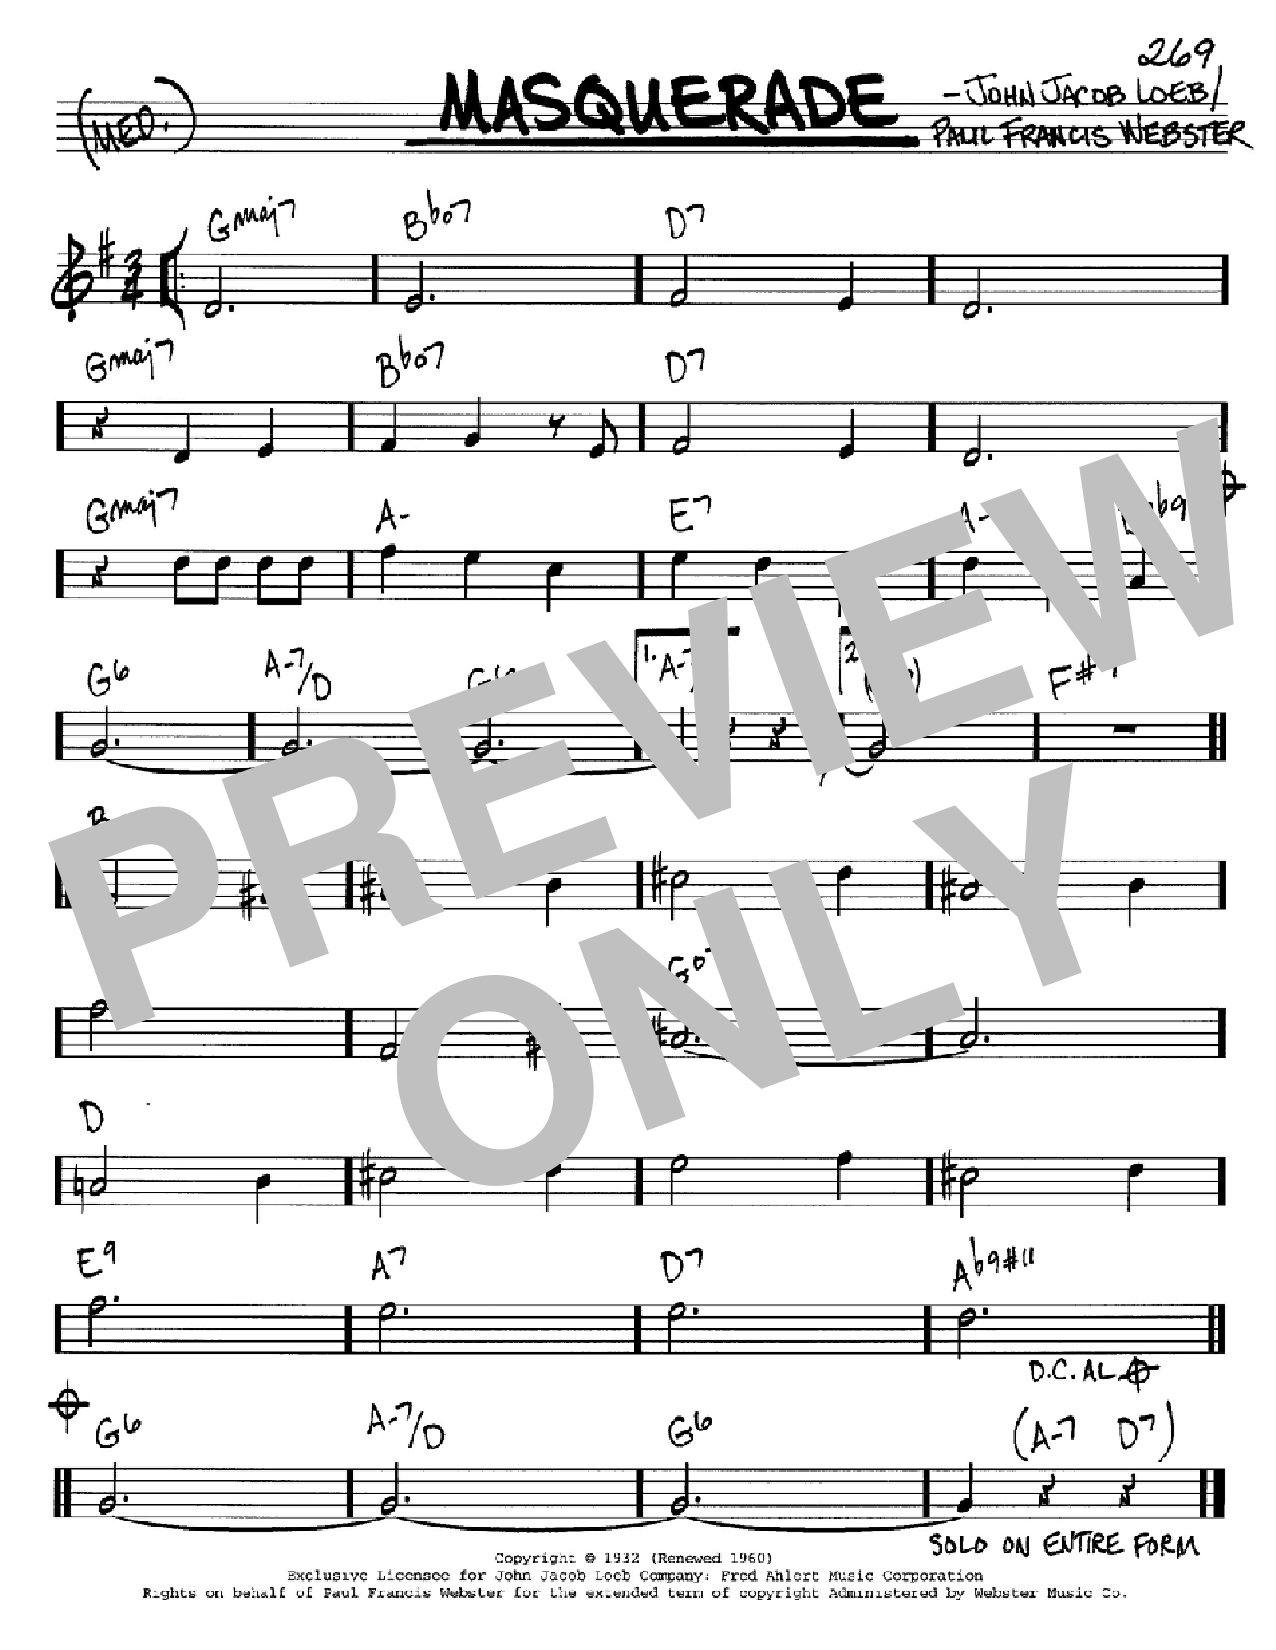 Paul Francis Webster Masquerade Sheet Music Notes & Chords for Real Book - Melody, Lyrics & Chords - C Instruments - Download or Print PDF